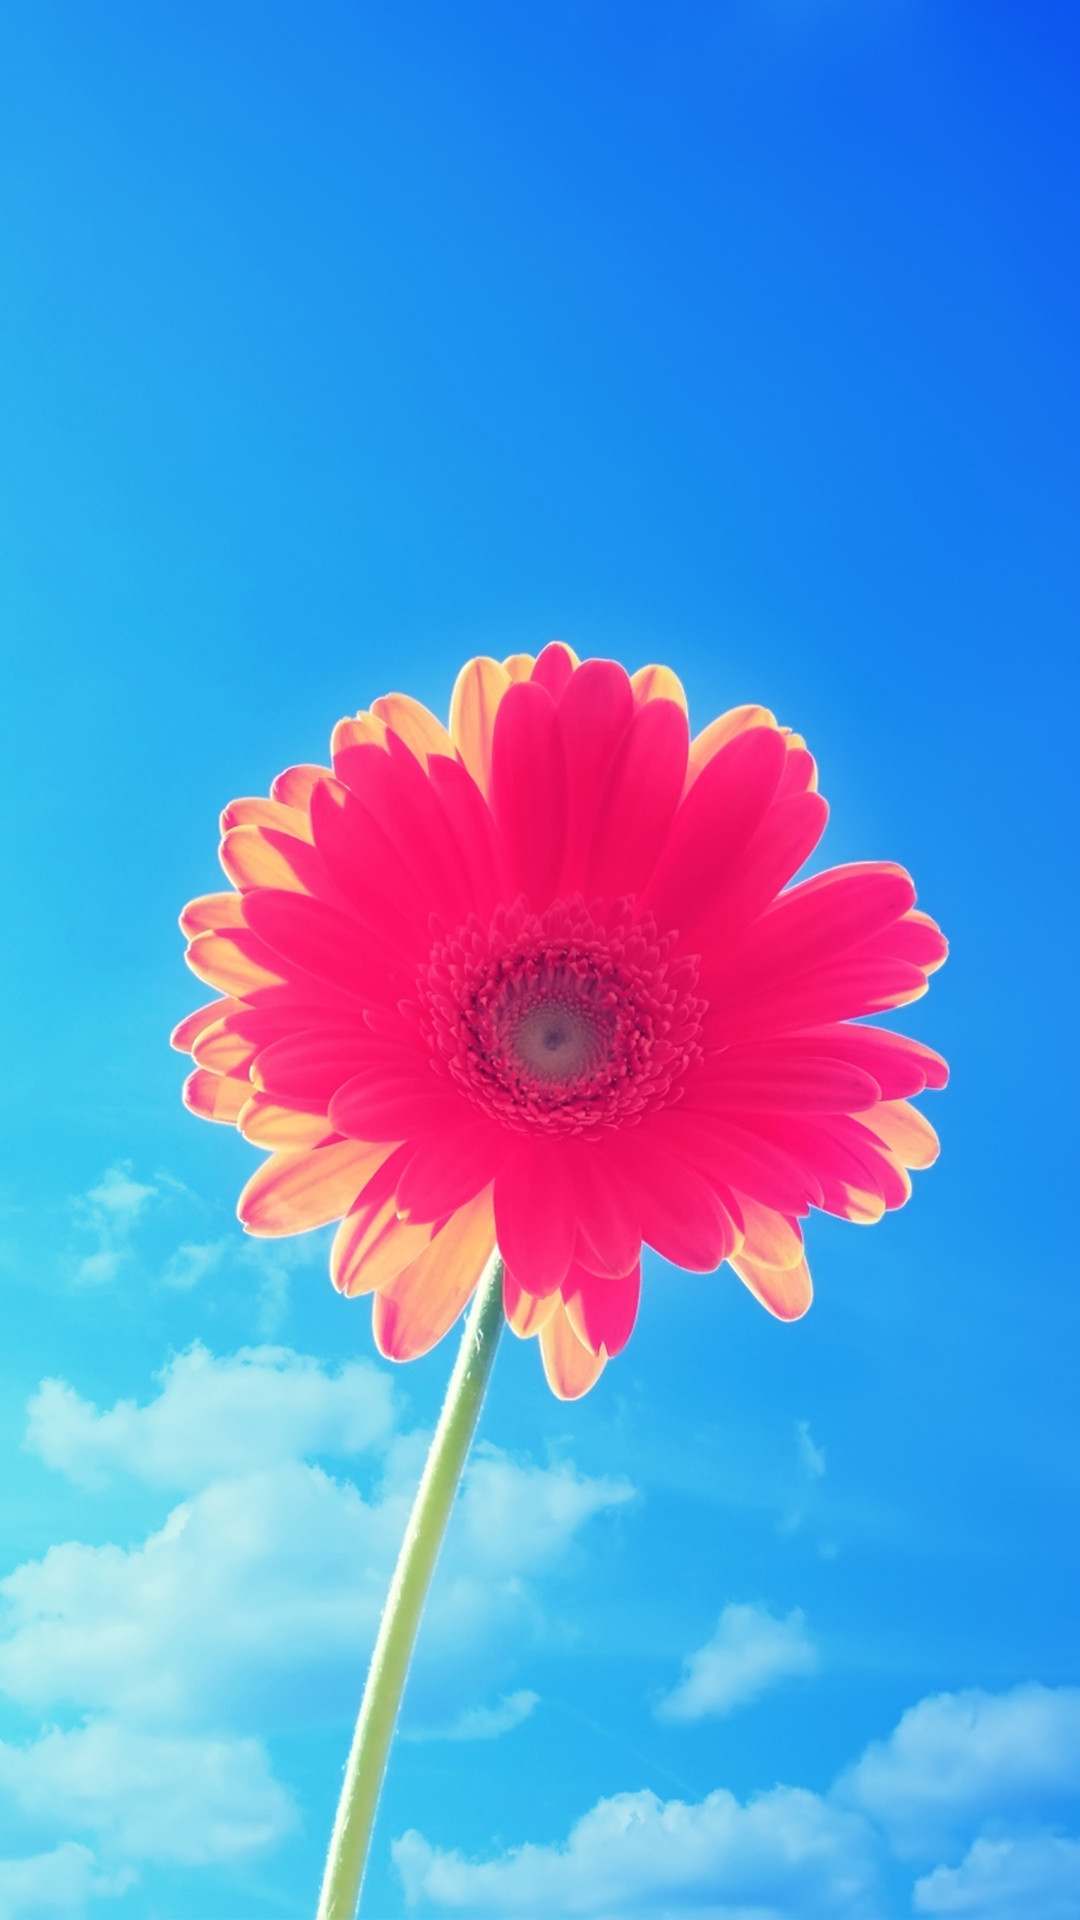 1080x1920 Pink Flower Blue Sky iPhone 6 Plus HD Wallpaper ...